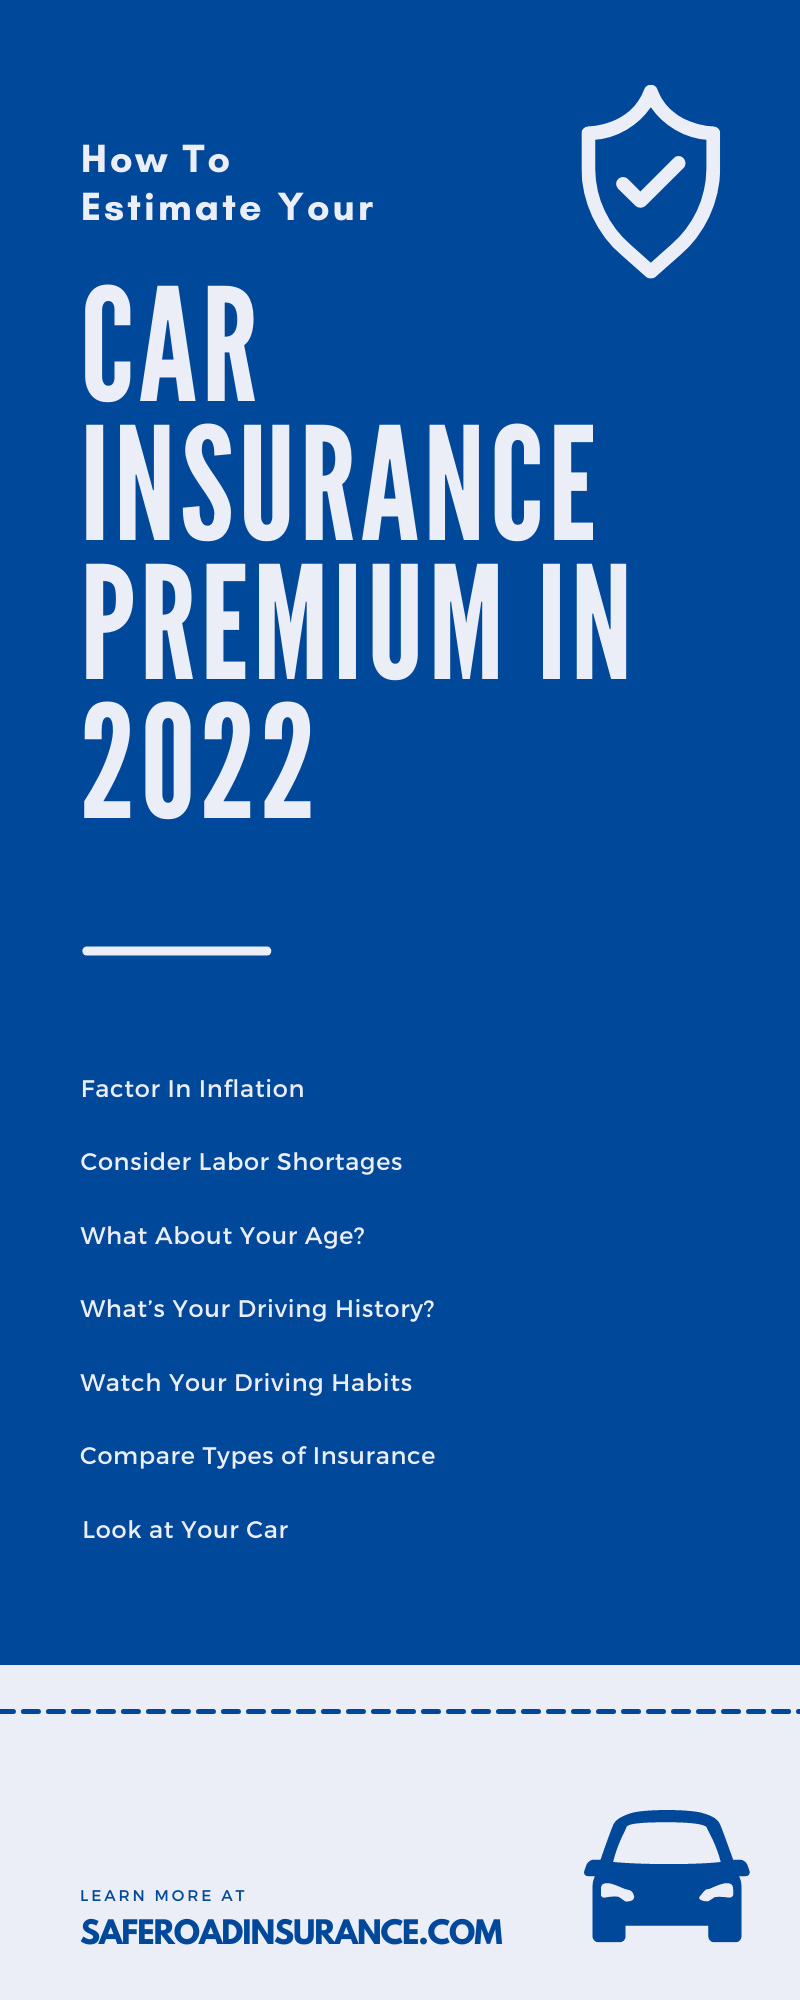 How To Estimate Your Car Insurance Premium in 2022